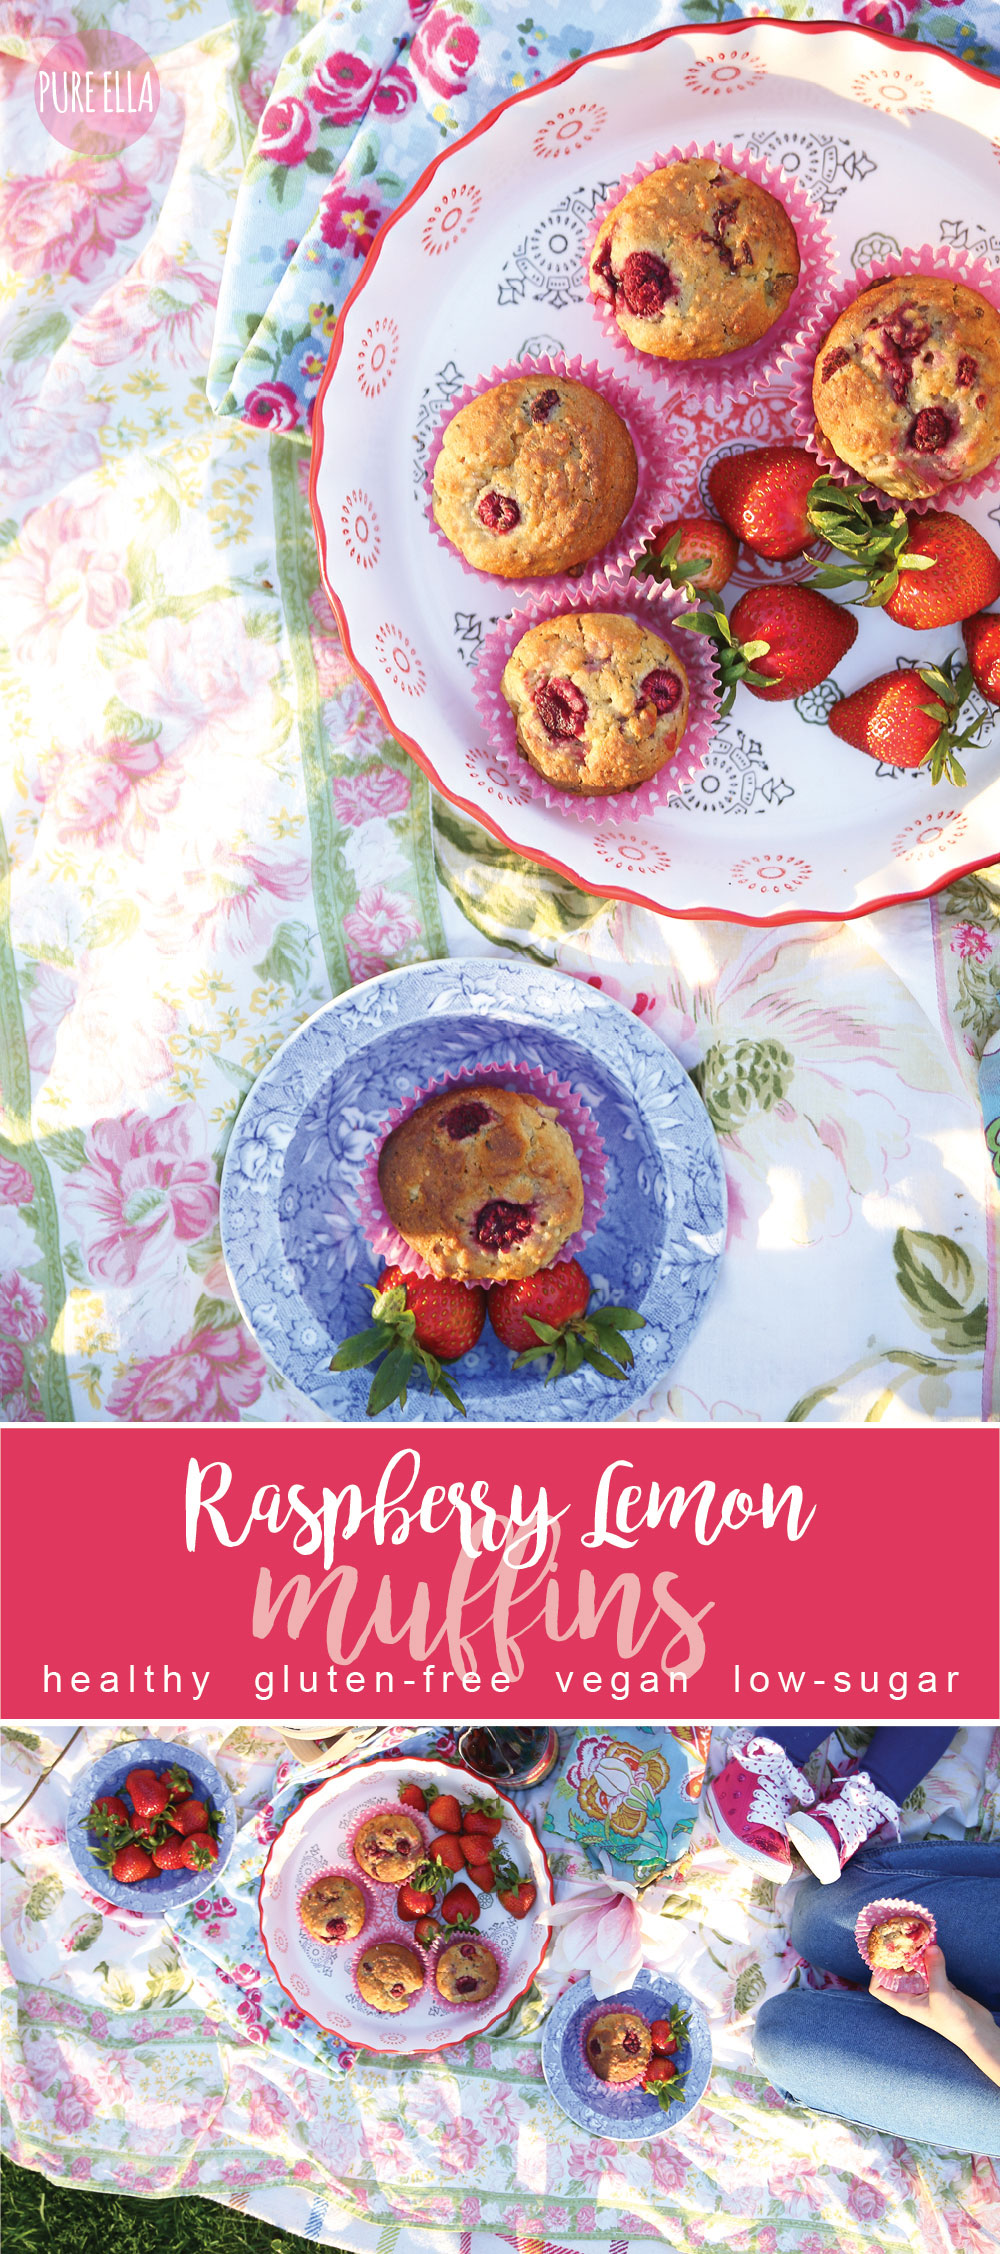 Ella-Leche-Pure-Ella-Raspberry-Lemon-Muffins-gluten-free-vegan-low-sugar9